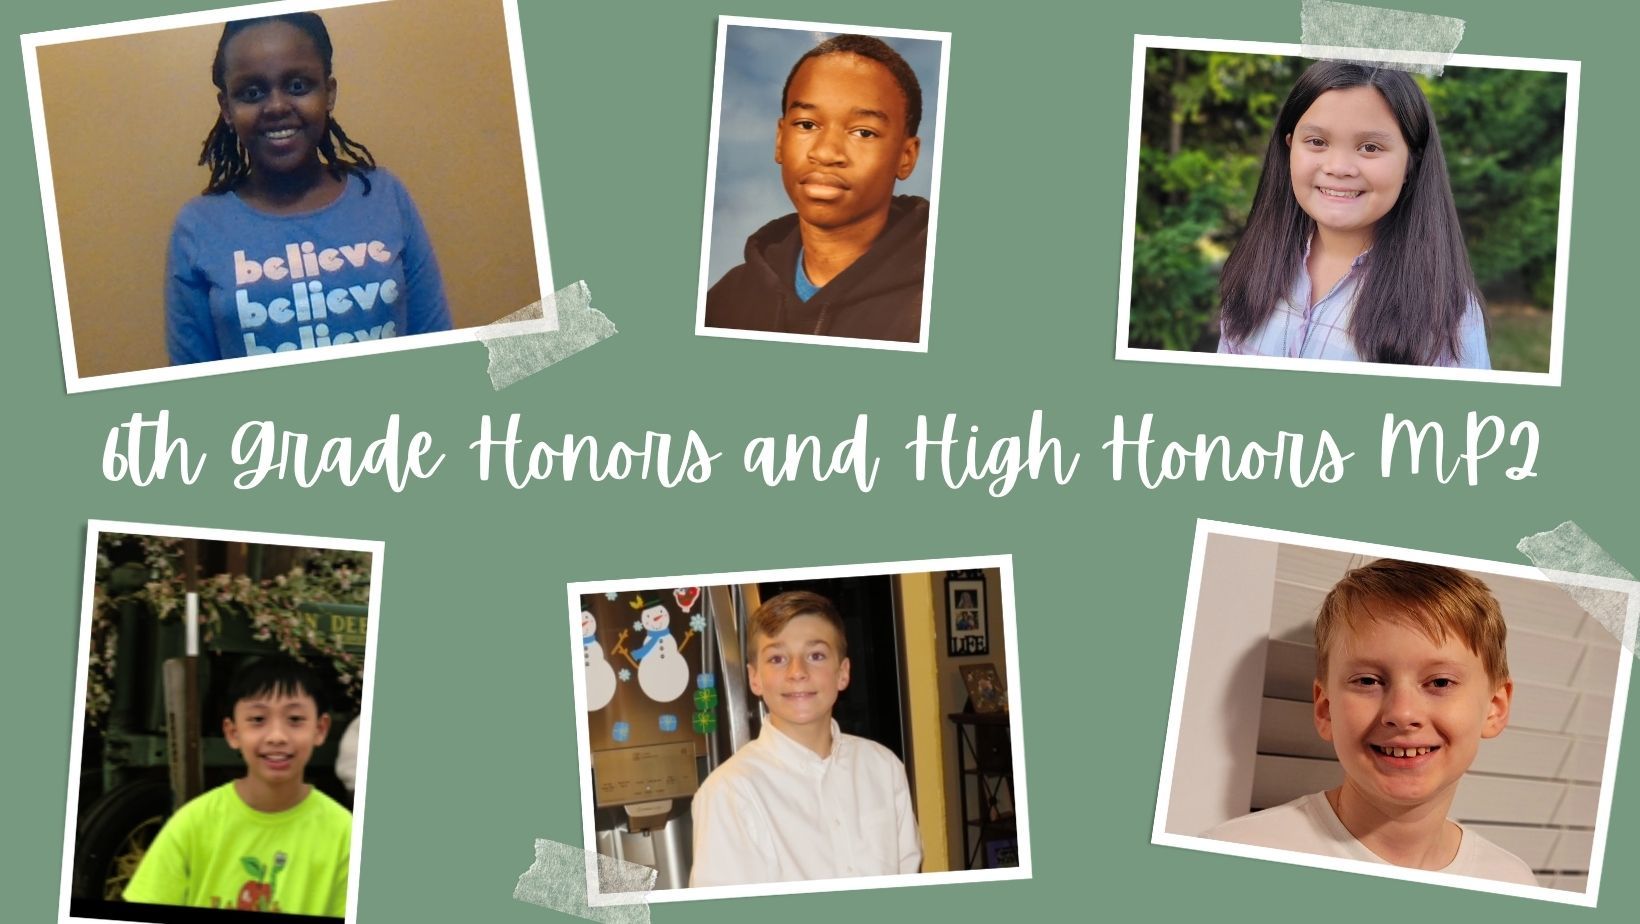 6th grade honor students